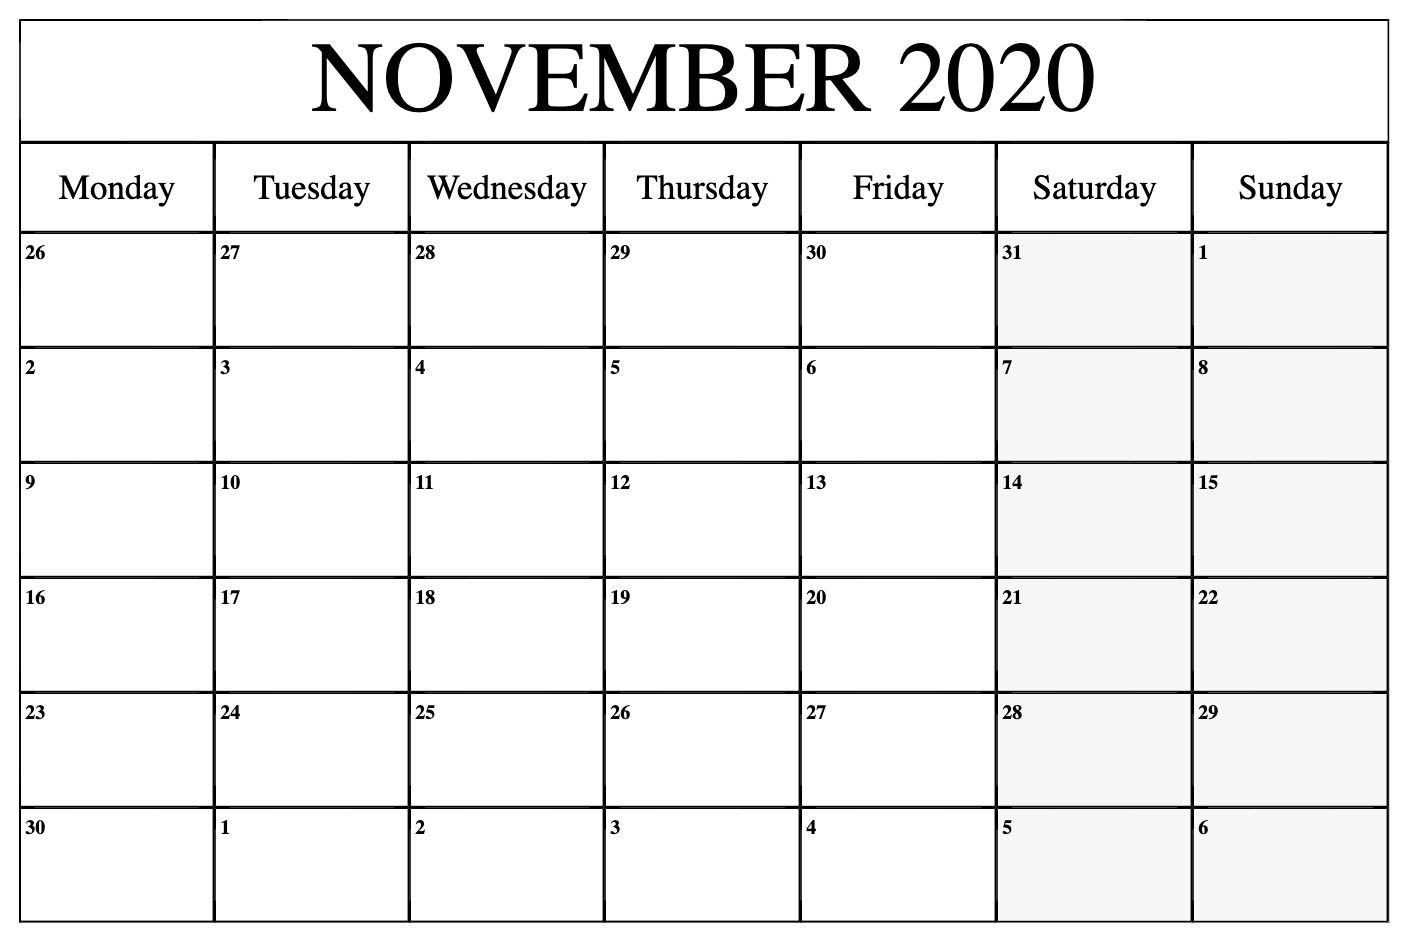 November 2020 Calendar November Kalender, January Calendar, Holiday